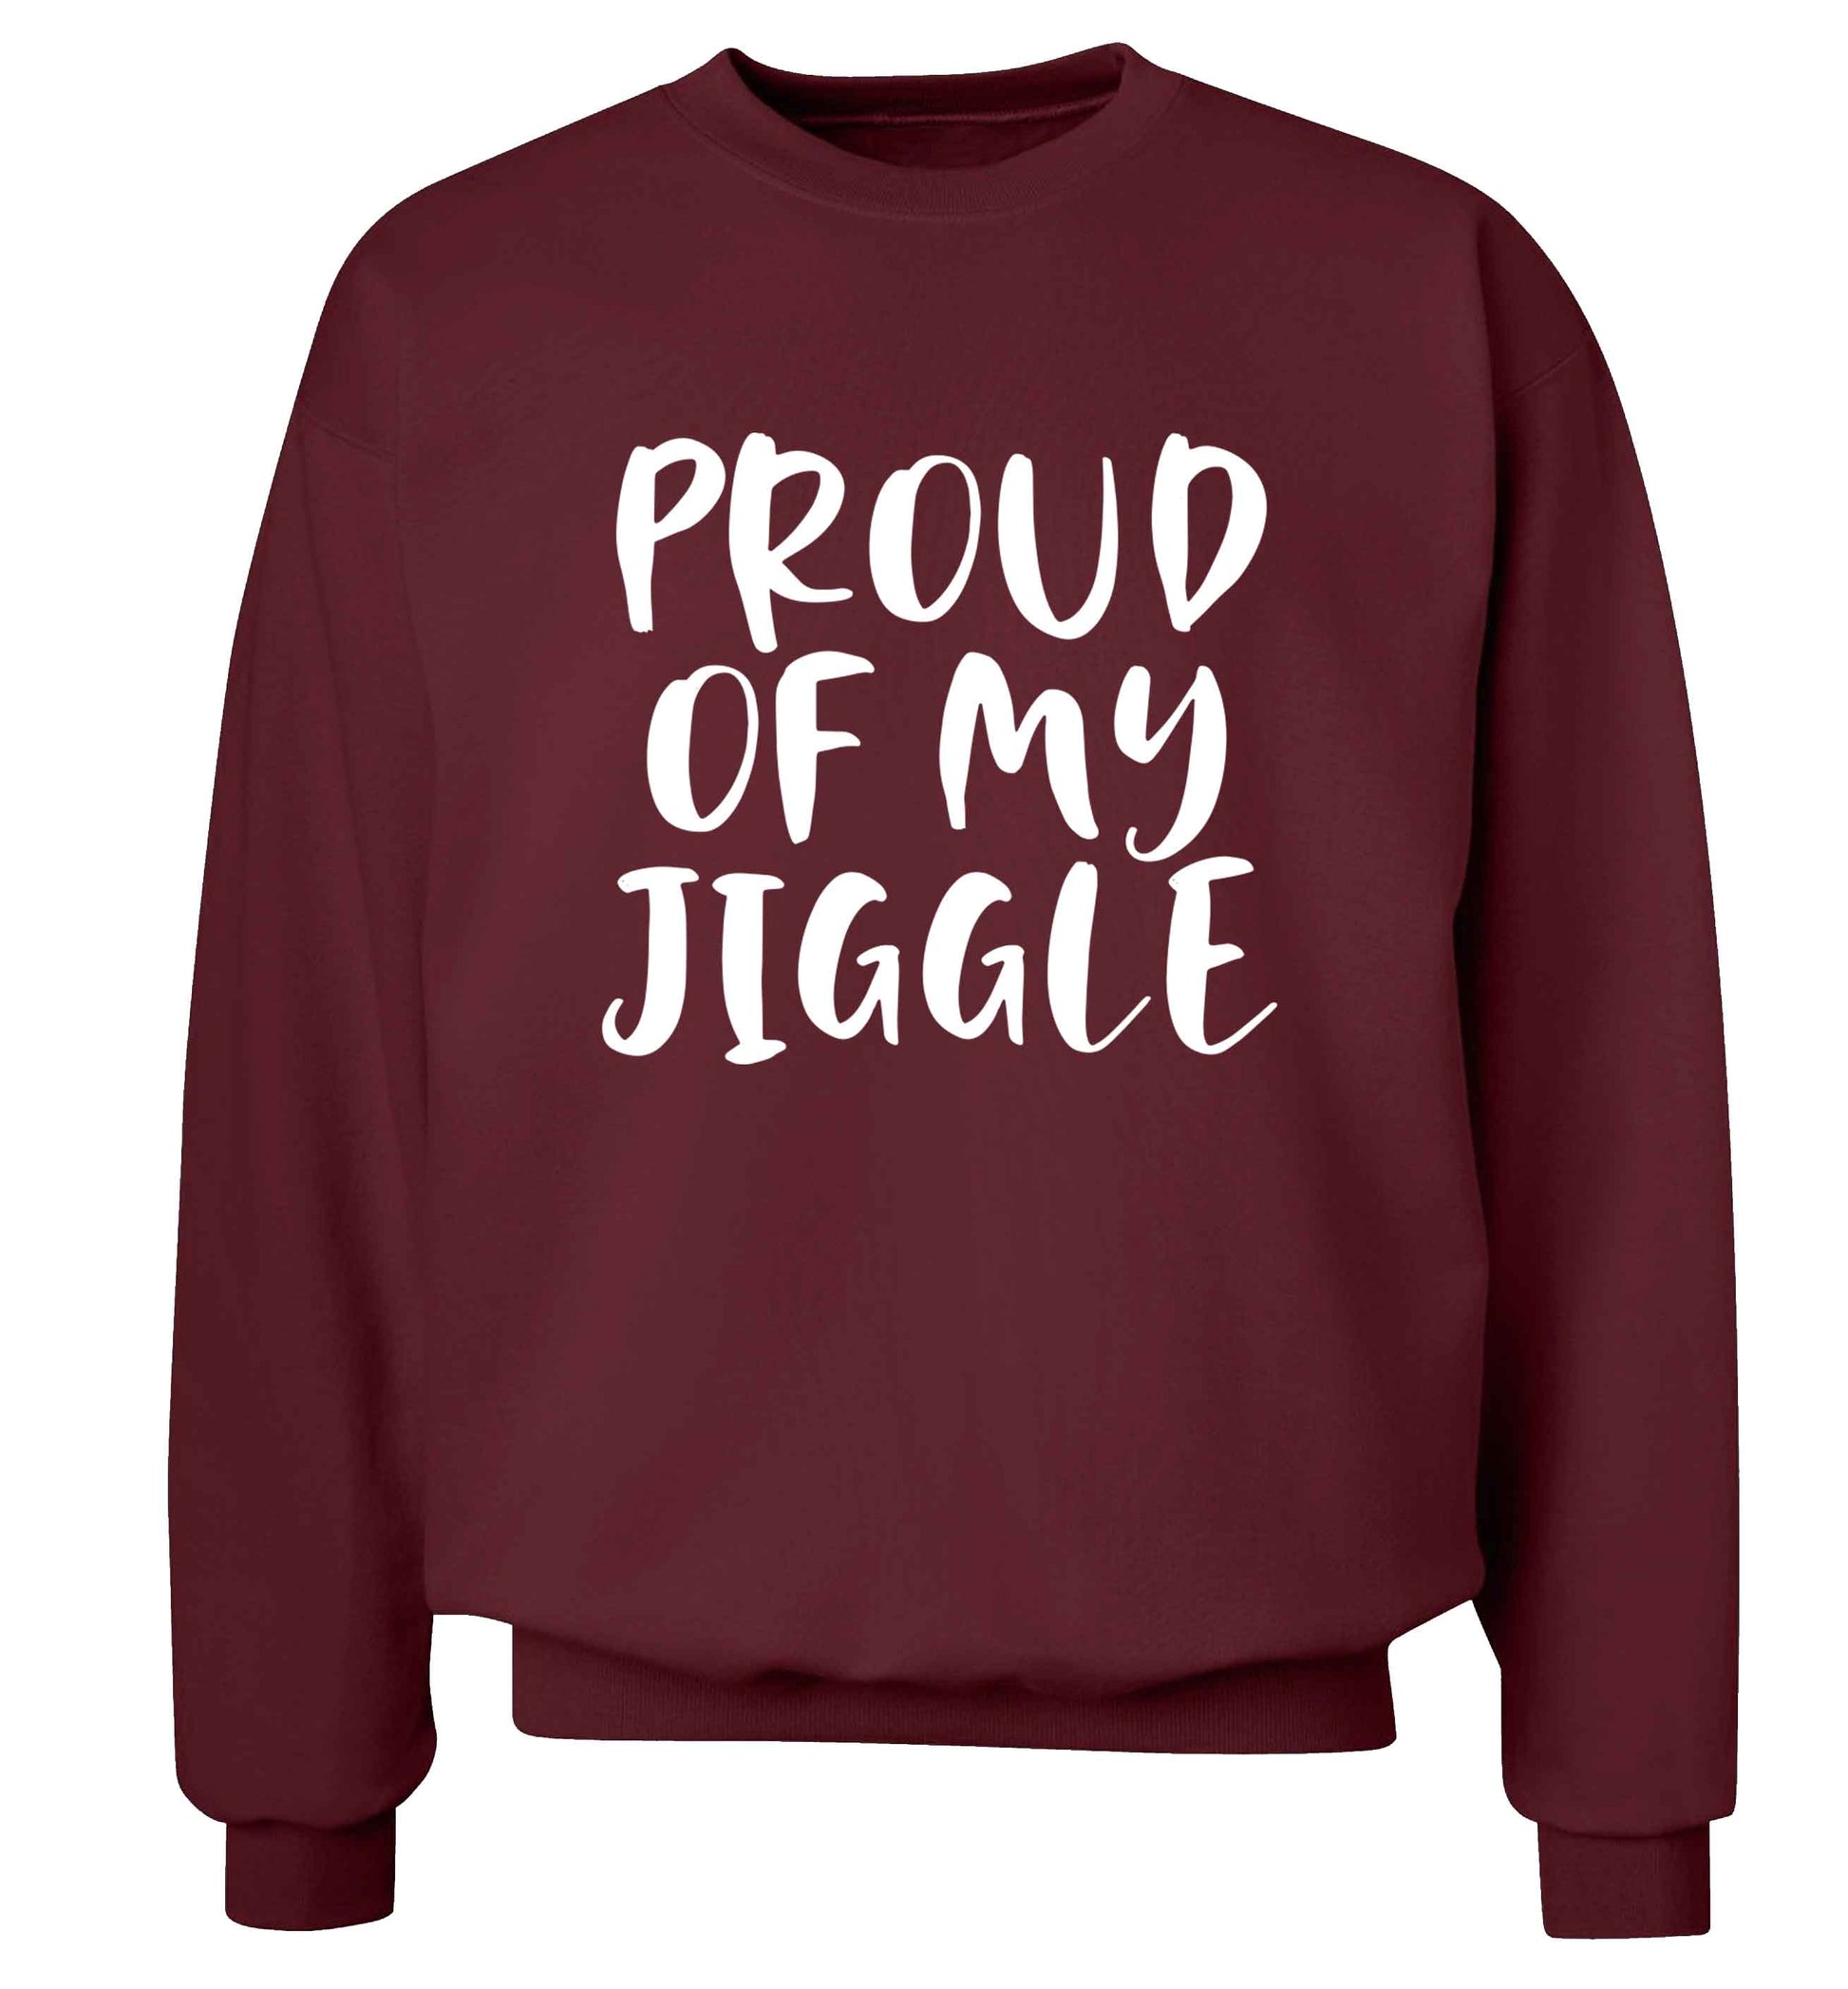 Proud of my jiggle adult's unisex maroon sweater 2XL